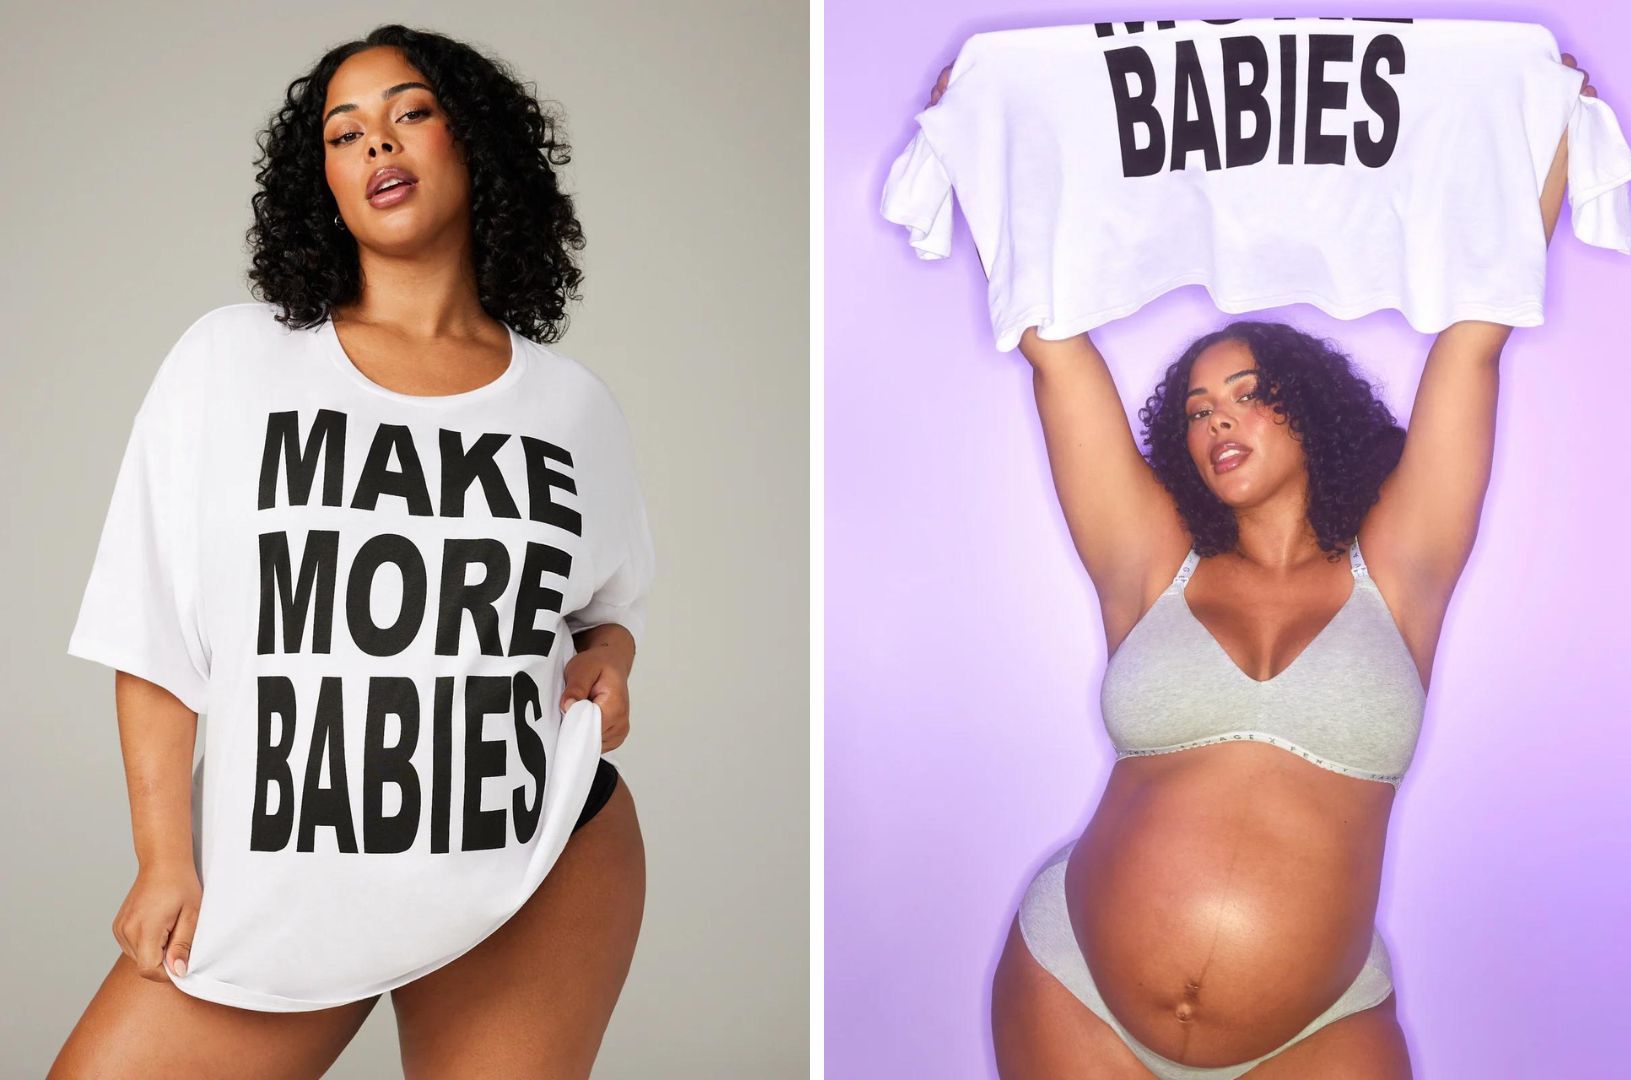 Make More Babies oversized t-shirt by Savage x Fenty, Rihanna's lingerie brand